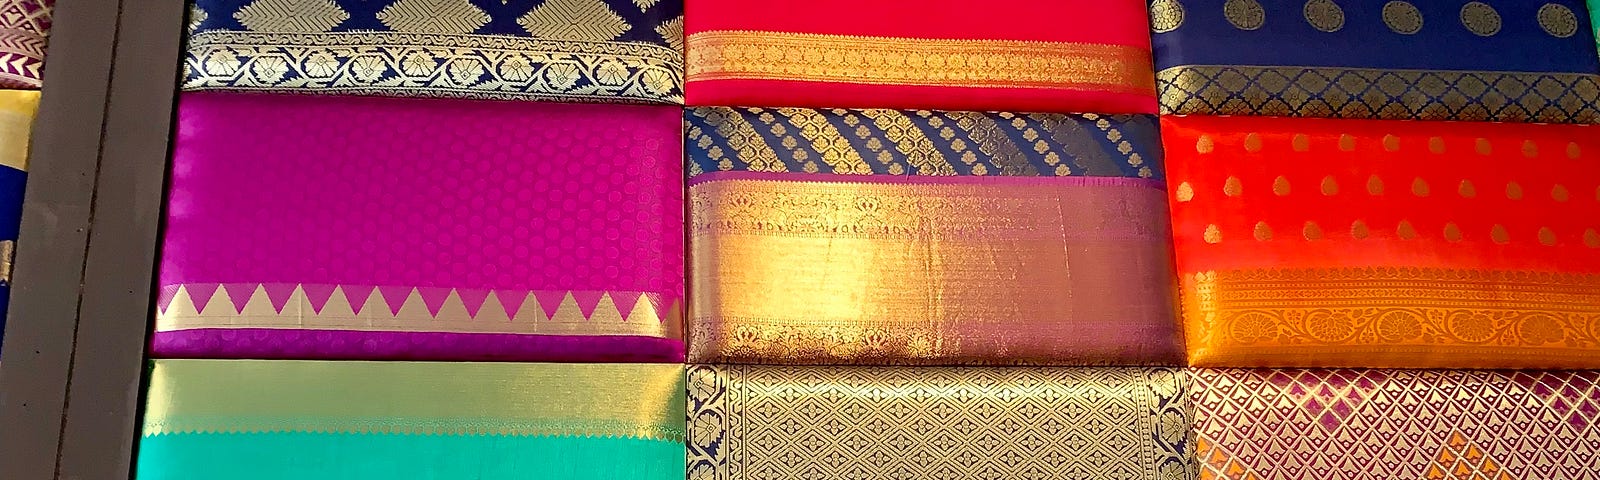 Saris on wall